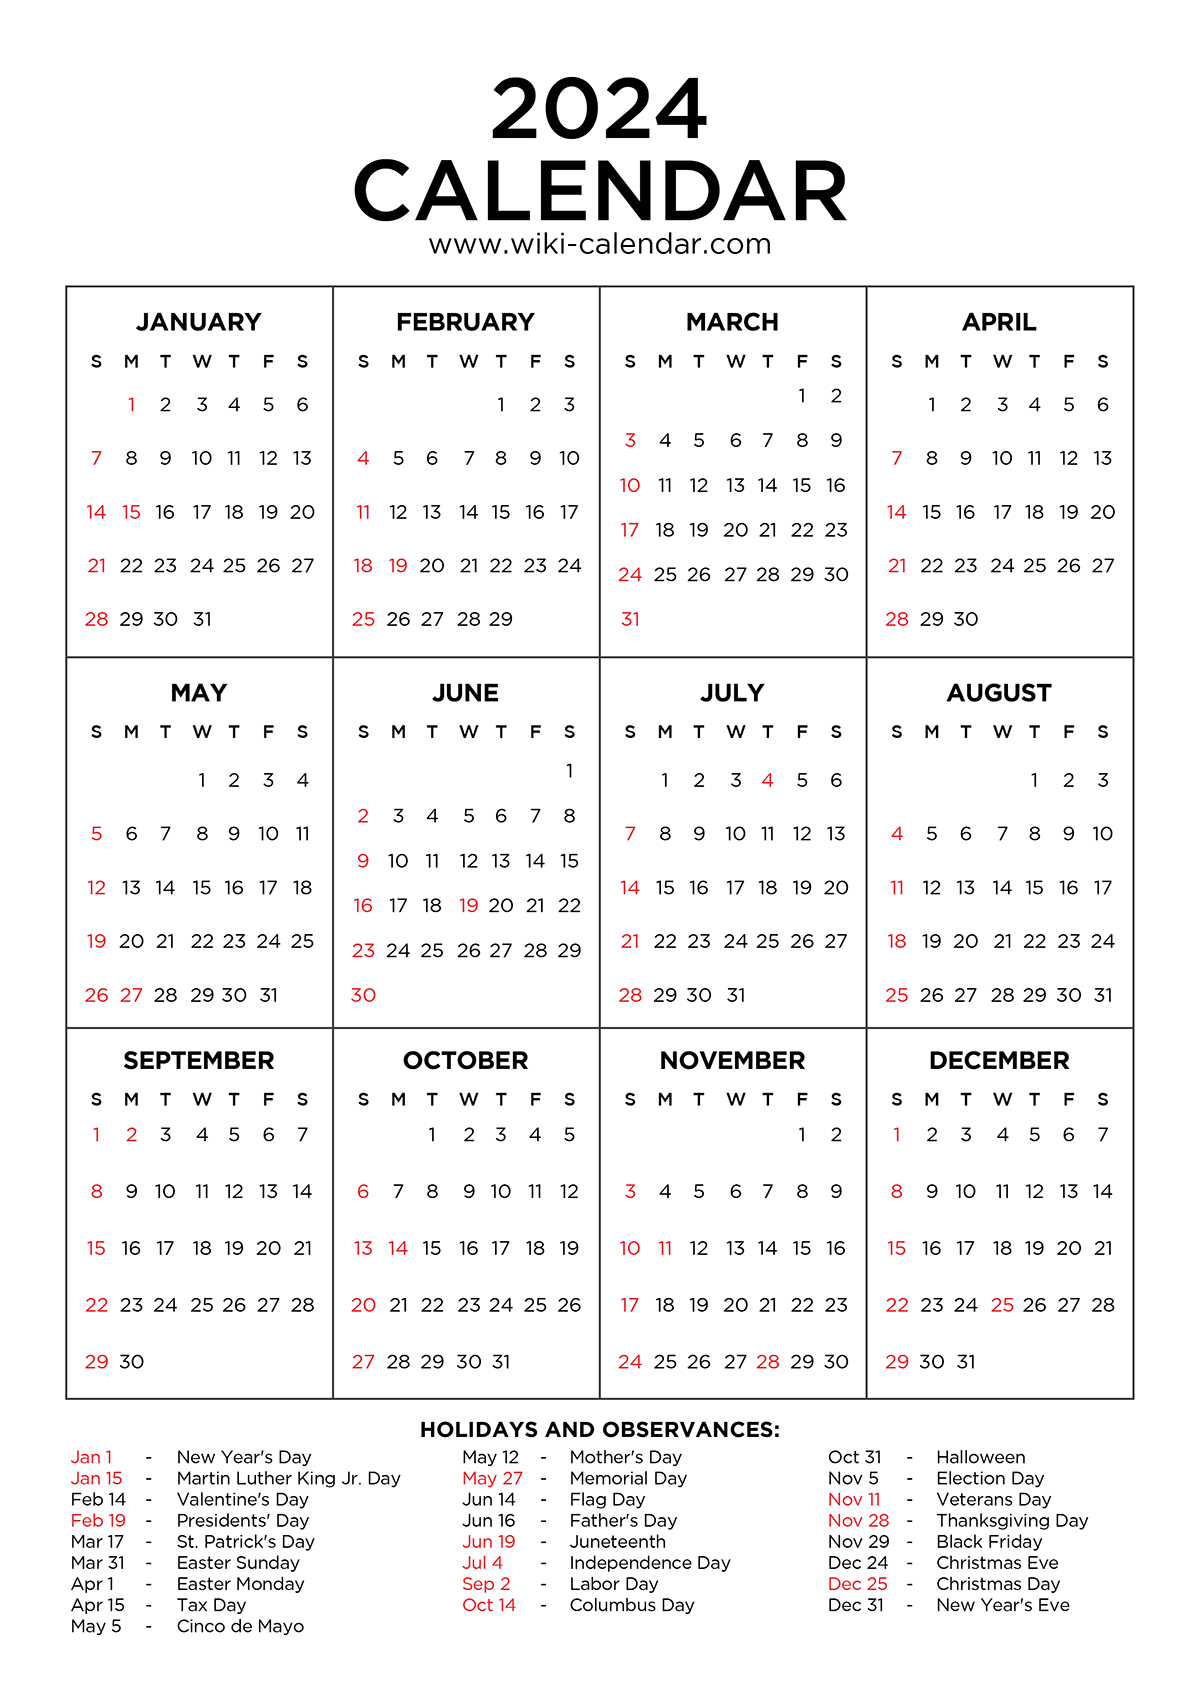 Year 2024 Calendar Printable With Holidays - Wiki Calendar | Free Printable 2024 Monthly Calendar With Holidays